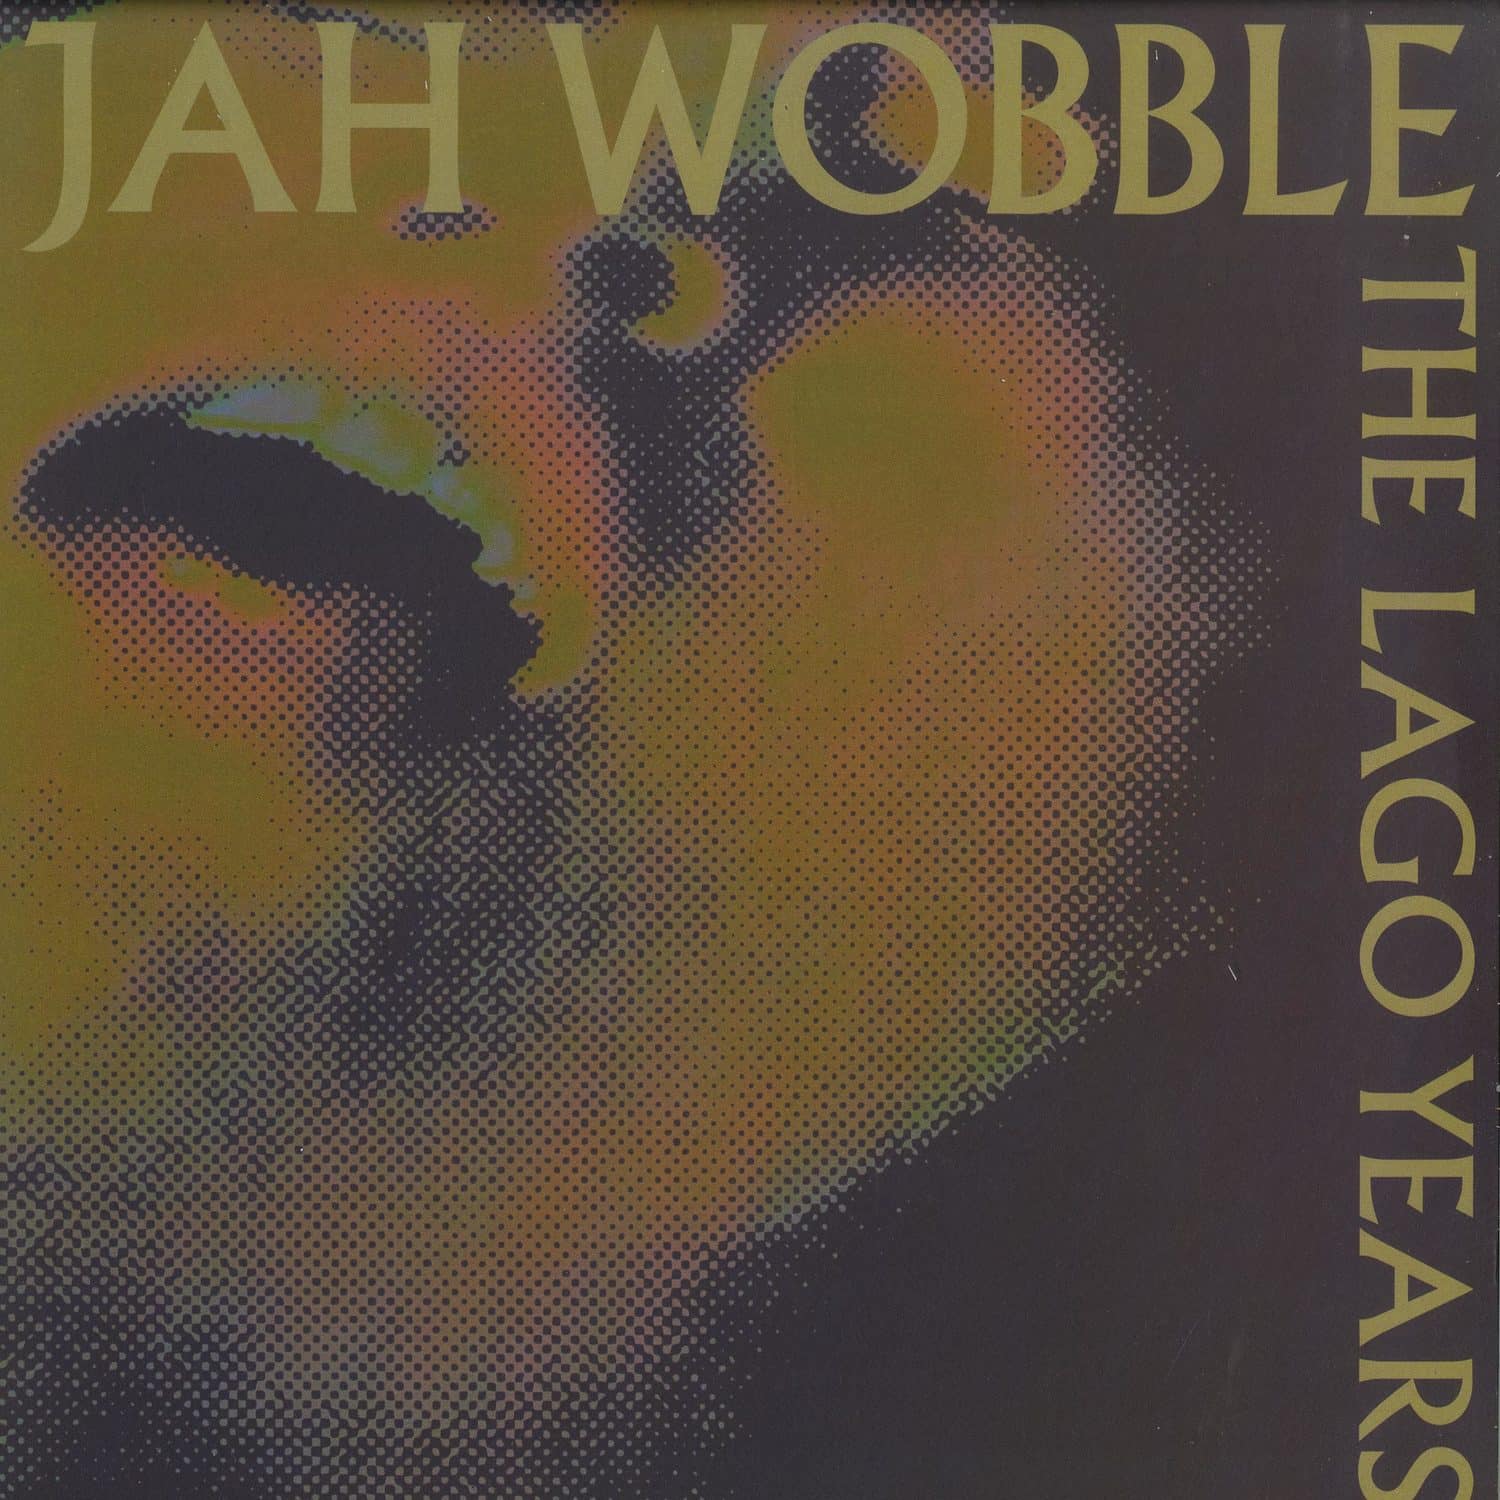 Jah Wobble - THE LAGO YEARS 